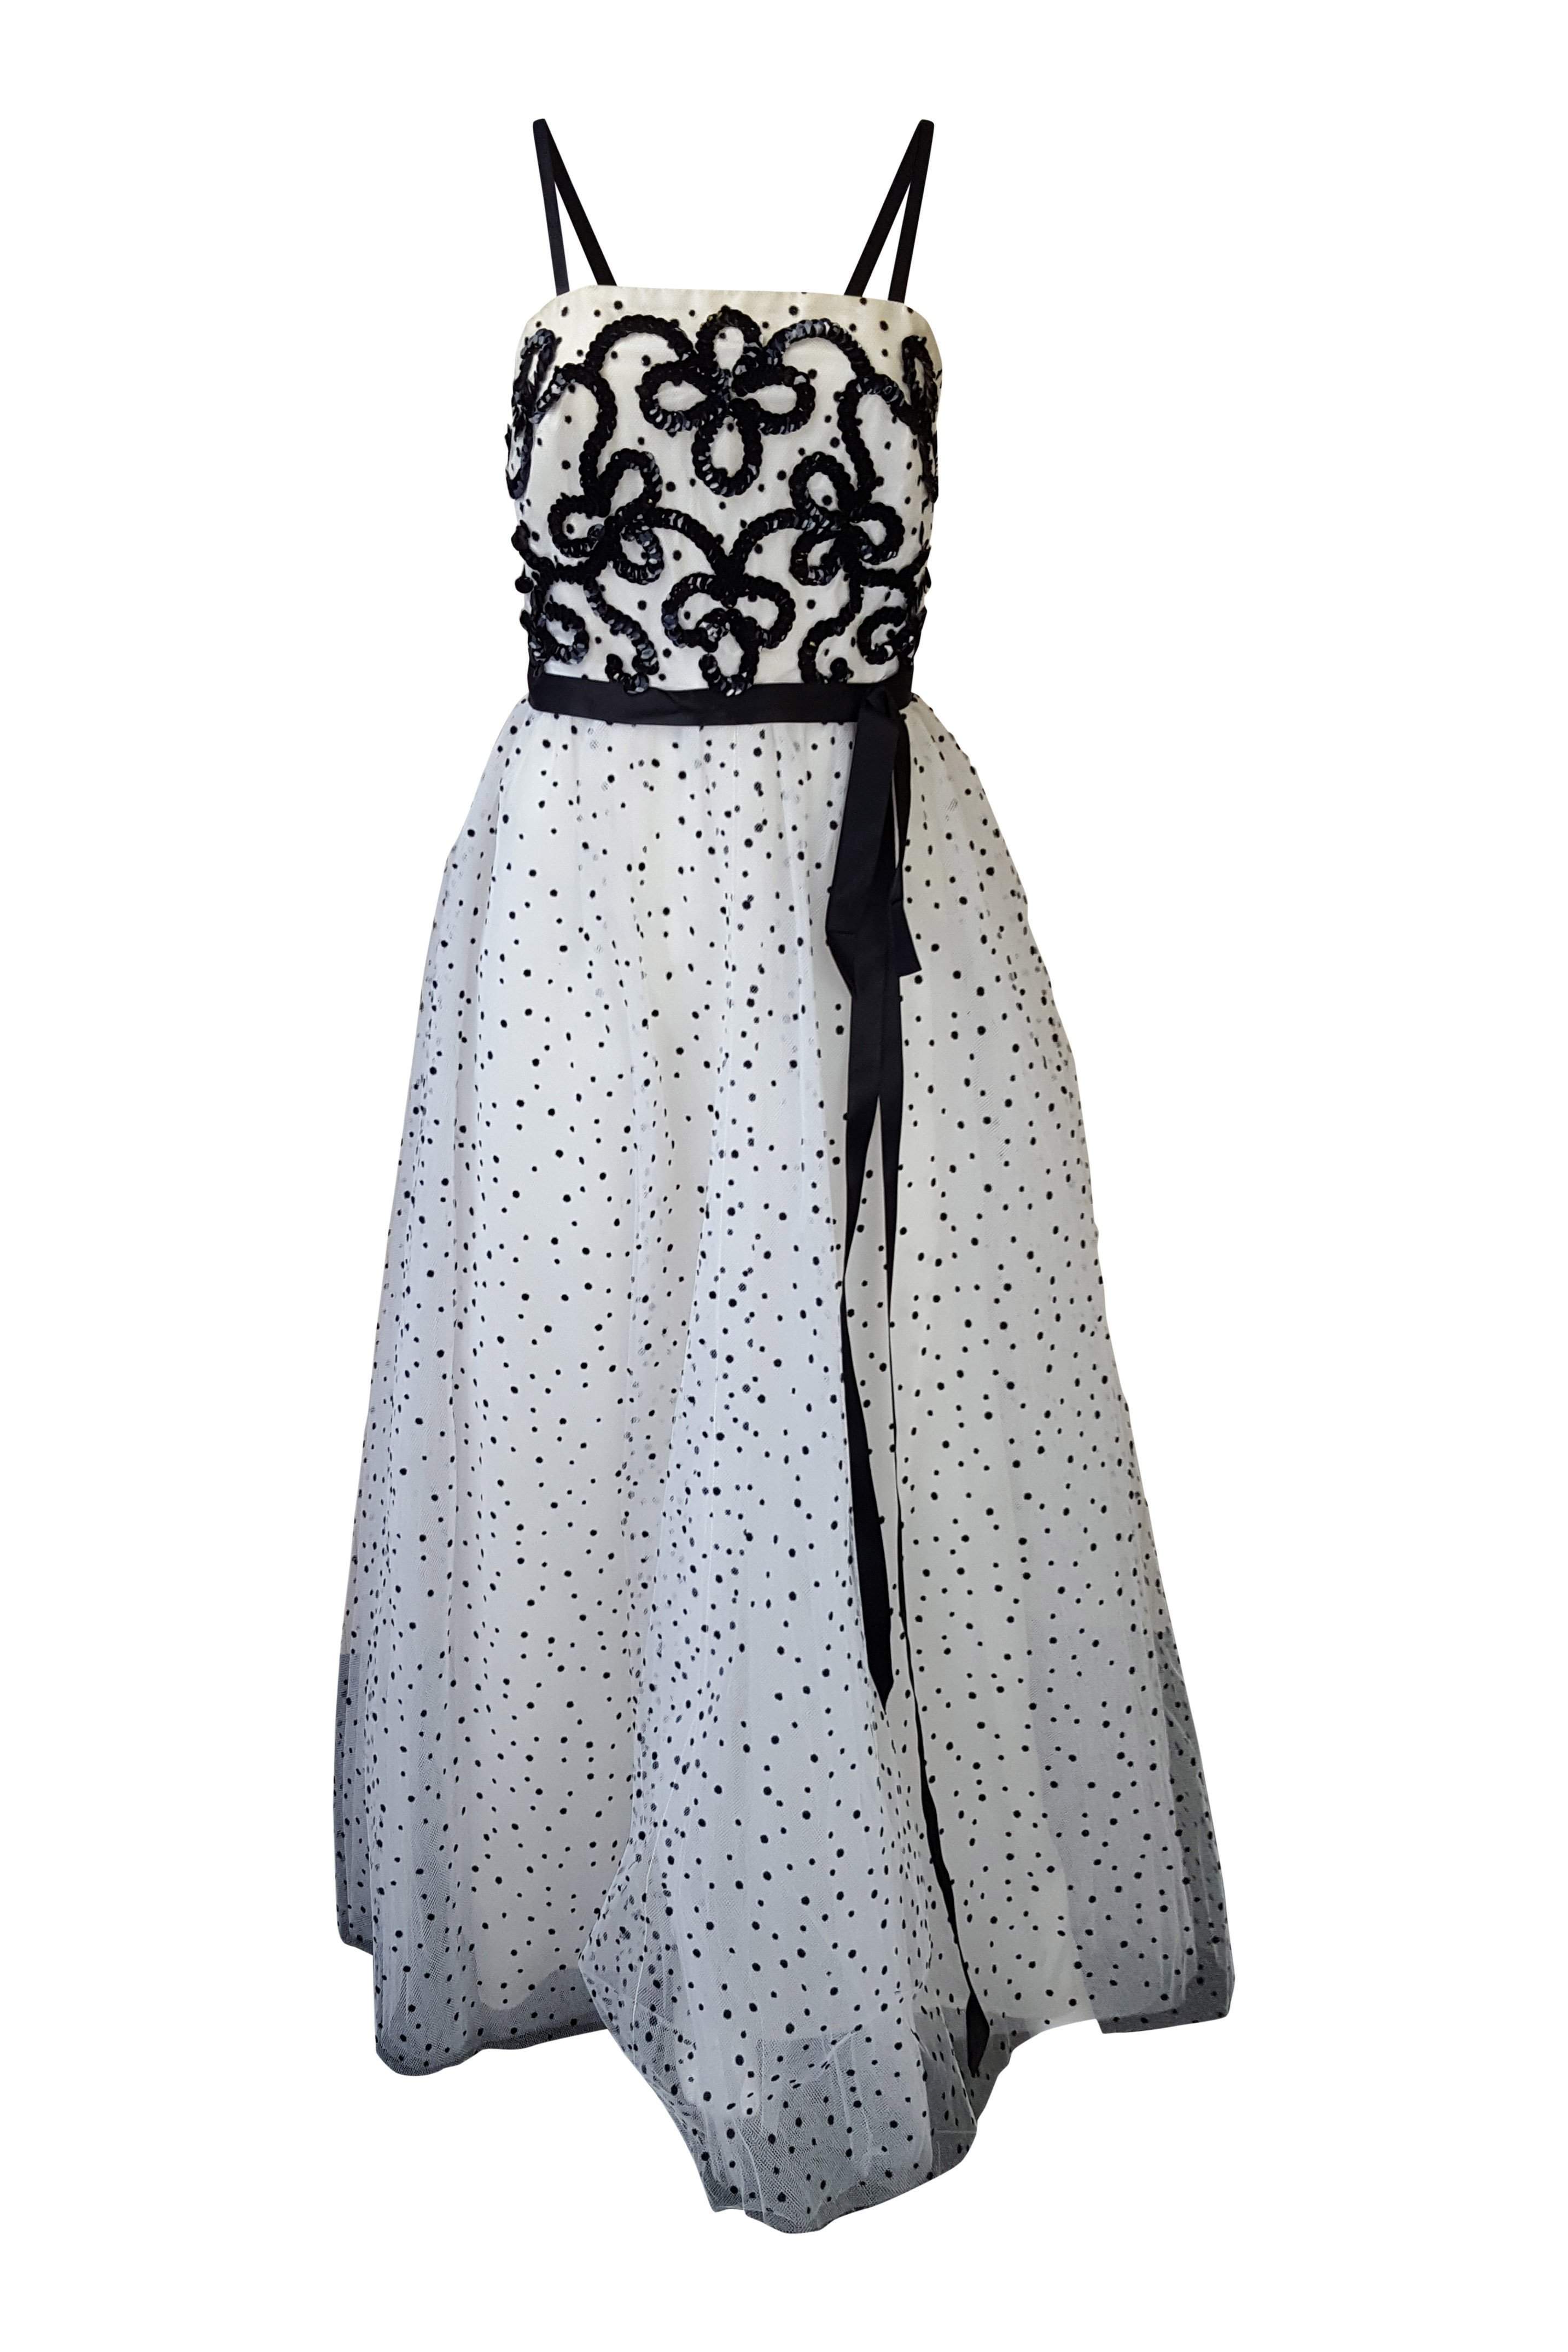 JEAN ALLEN Vintage Black and White Polka Dot Prom Dress (UK 10)-Jean Allen-The Freperie